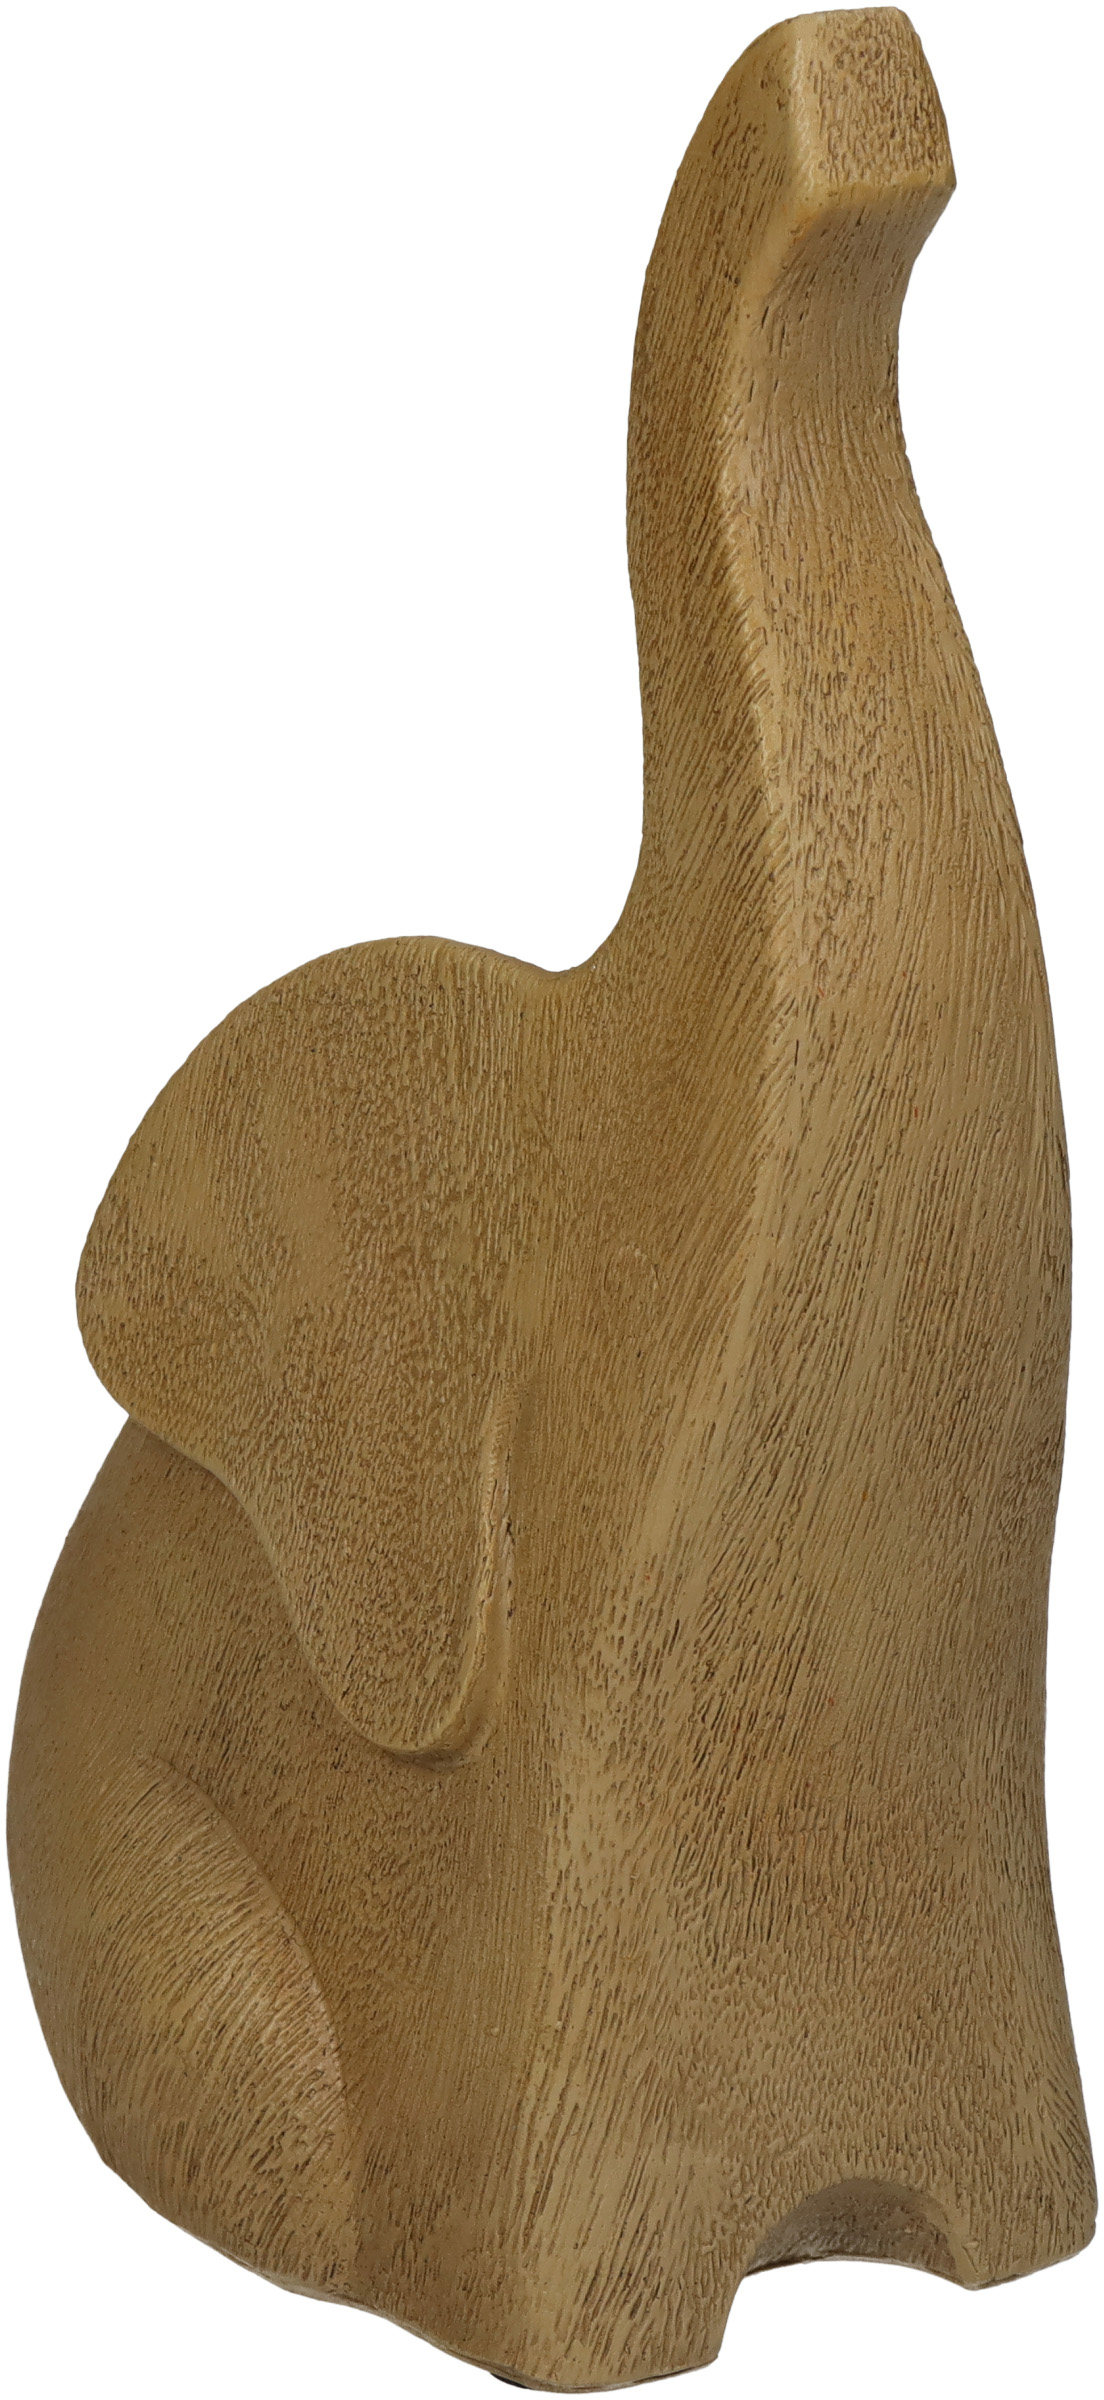 Ornament Elephant Natural 11x8x18cm